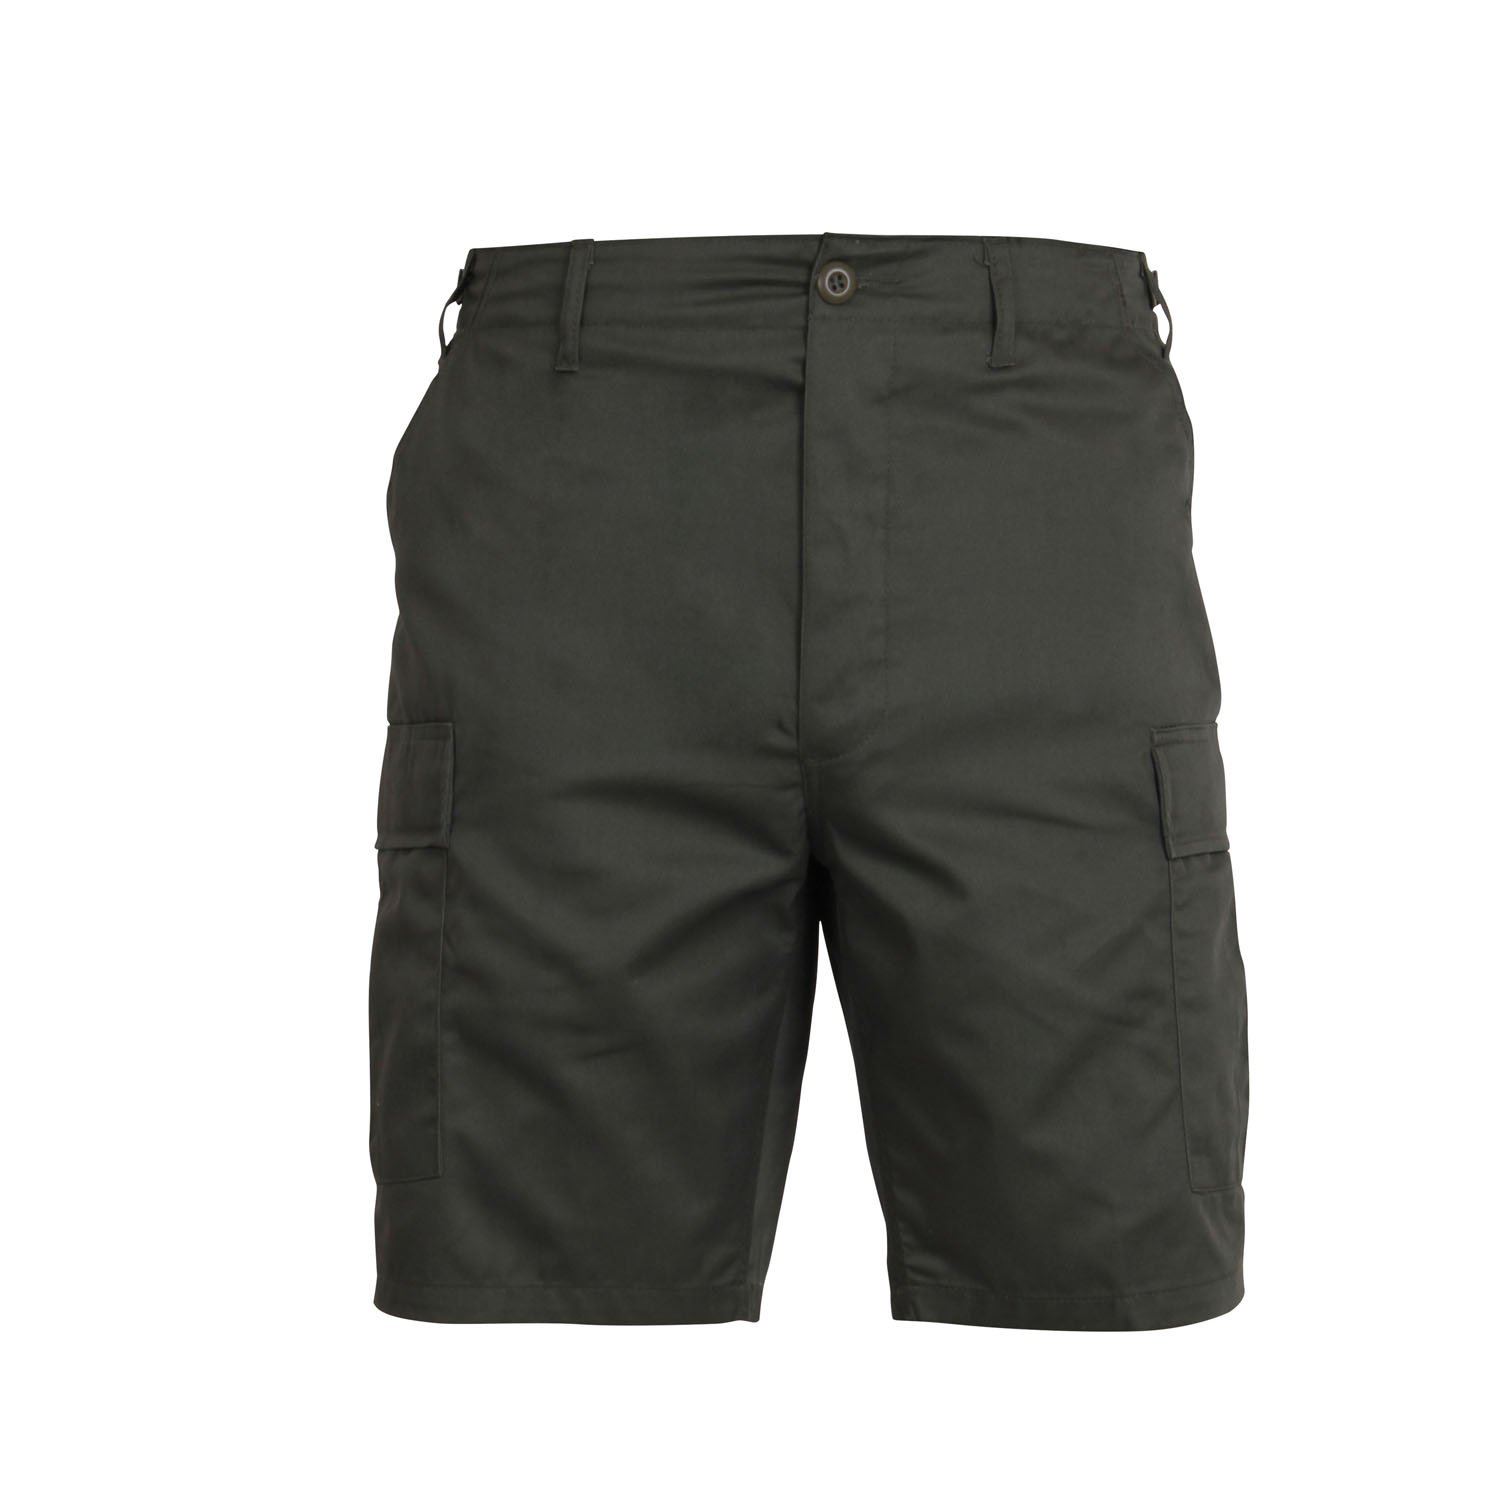 Buy Rothco BDU Cargo Shorts Men’s Outdoor Shorts Hiking Shorts | Fado168